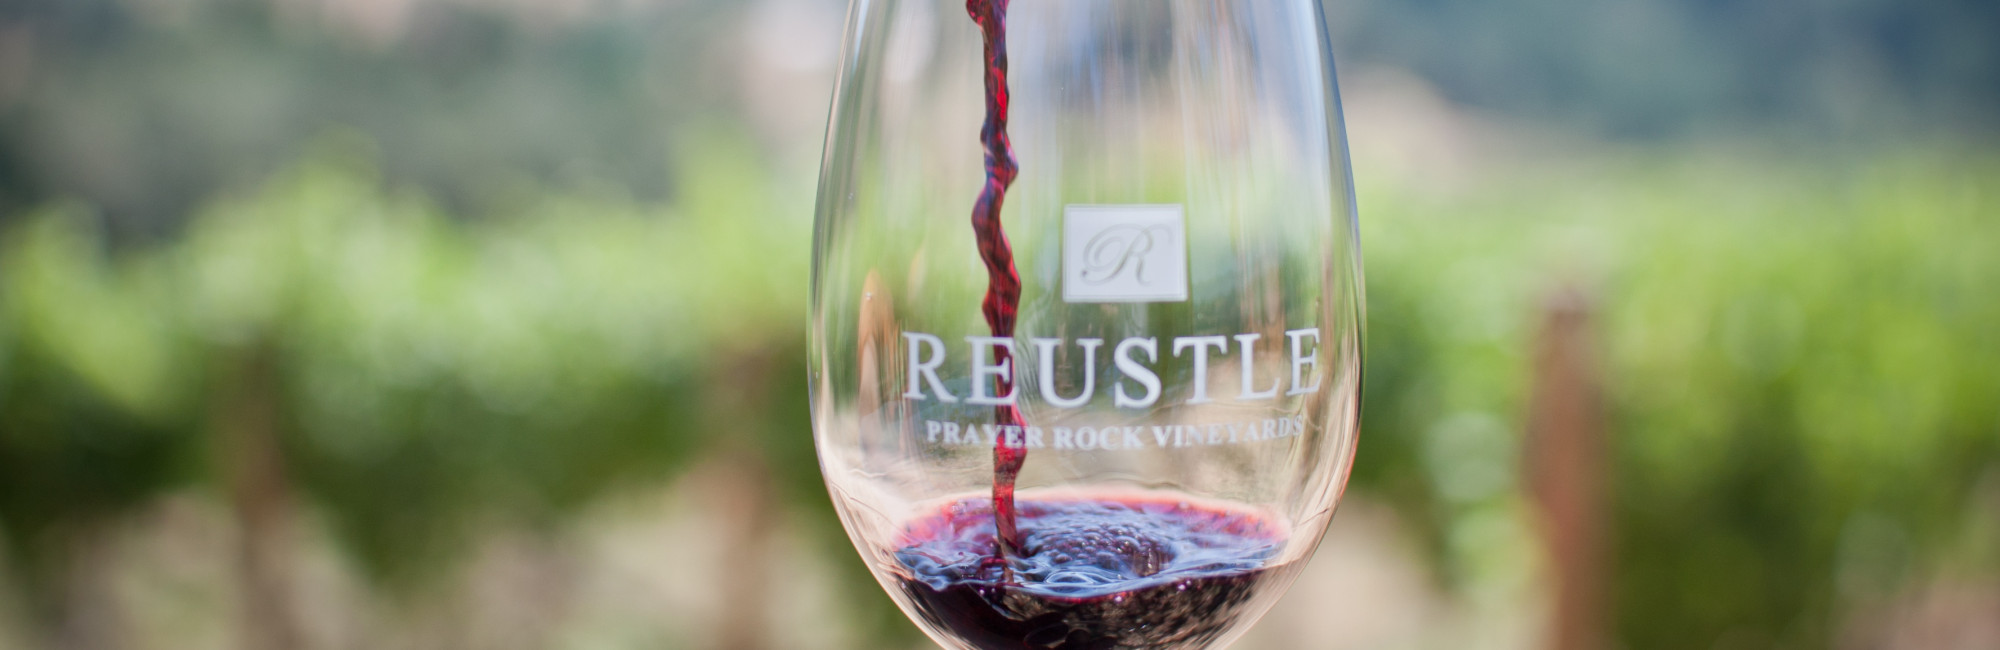 2017 Pacific Northwest Winery of the Year: Reustle Prayer Rock Vineyard